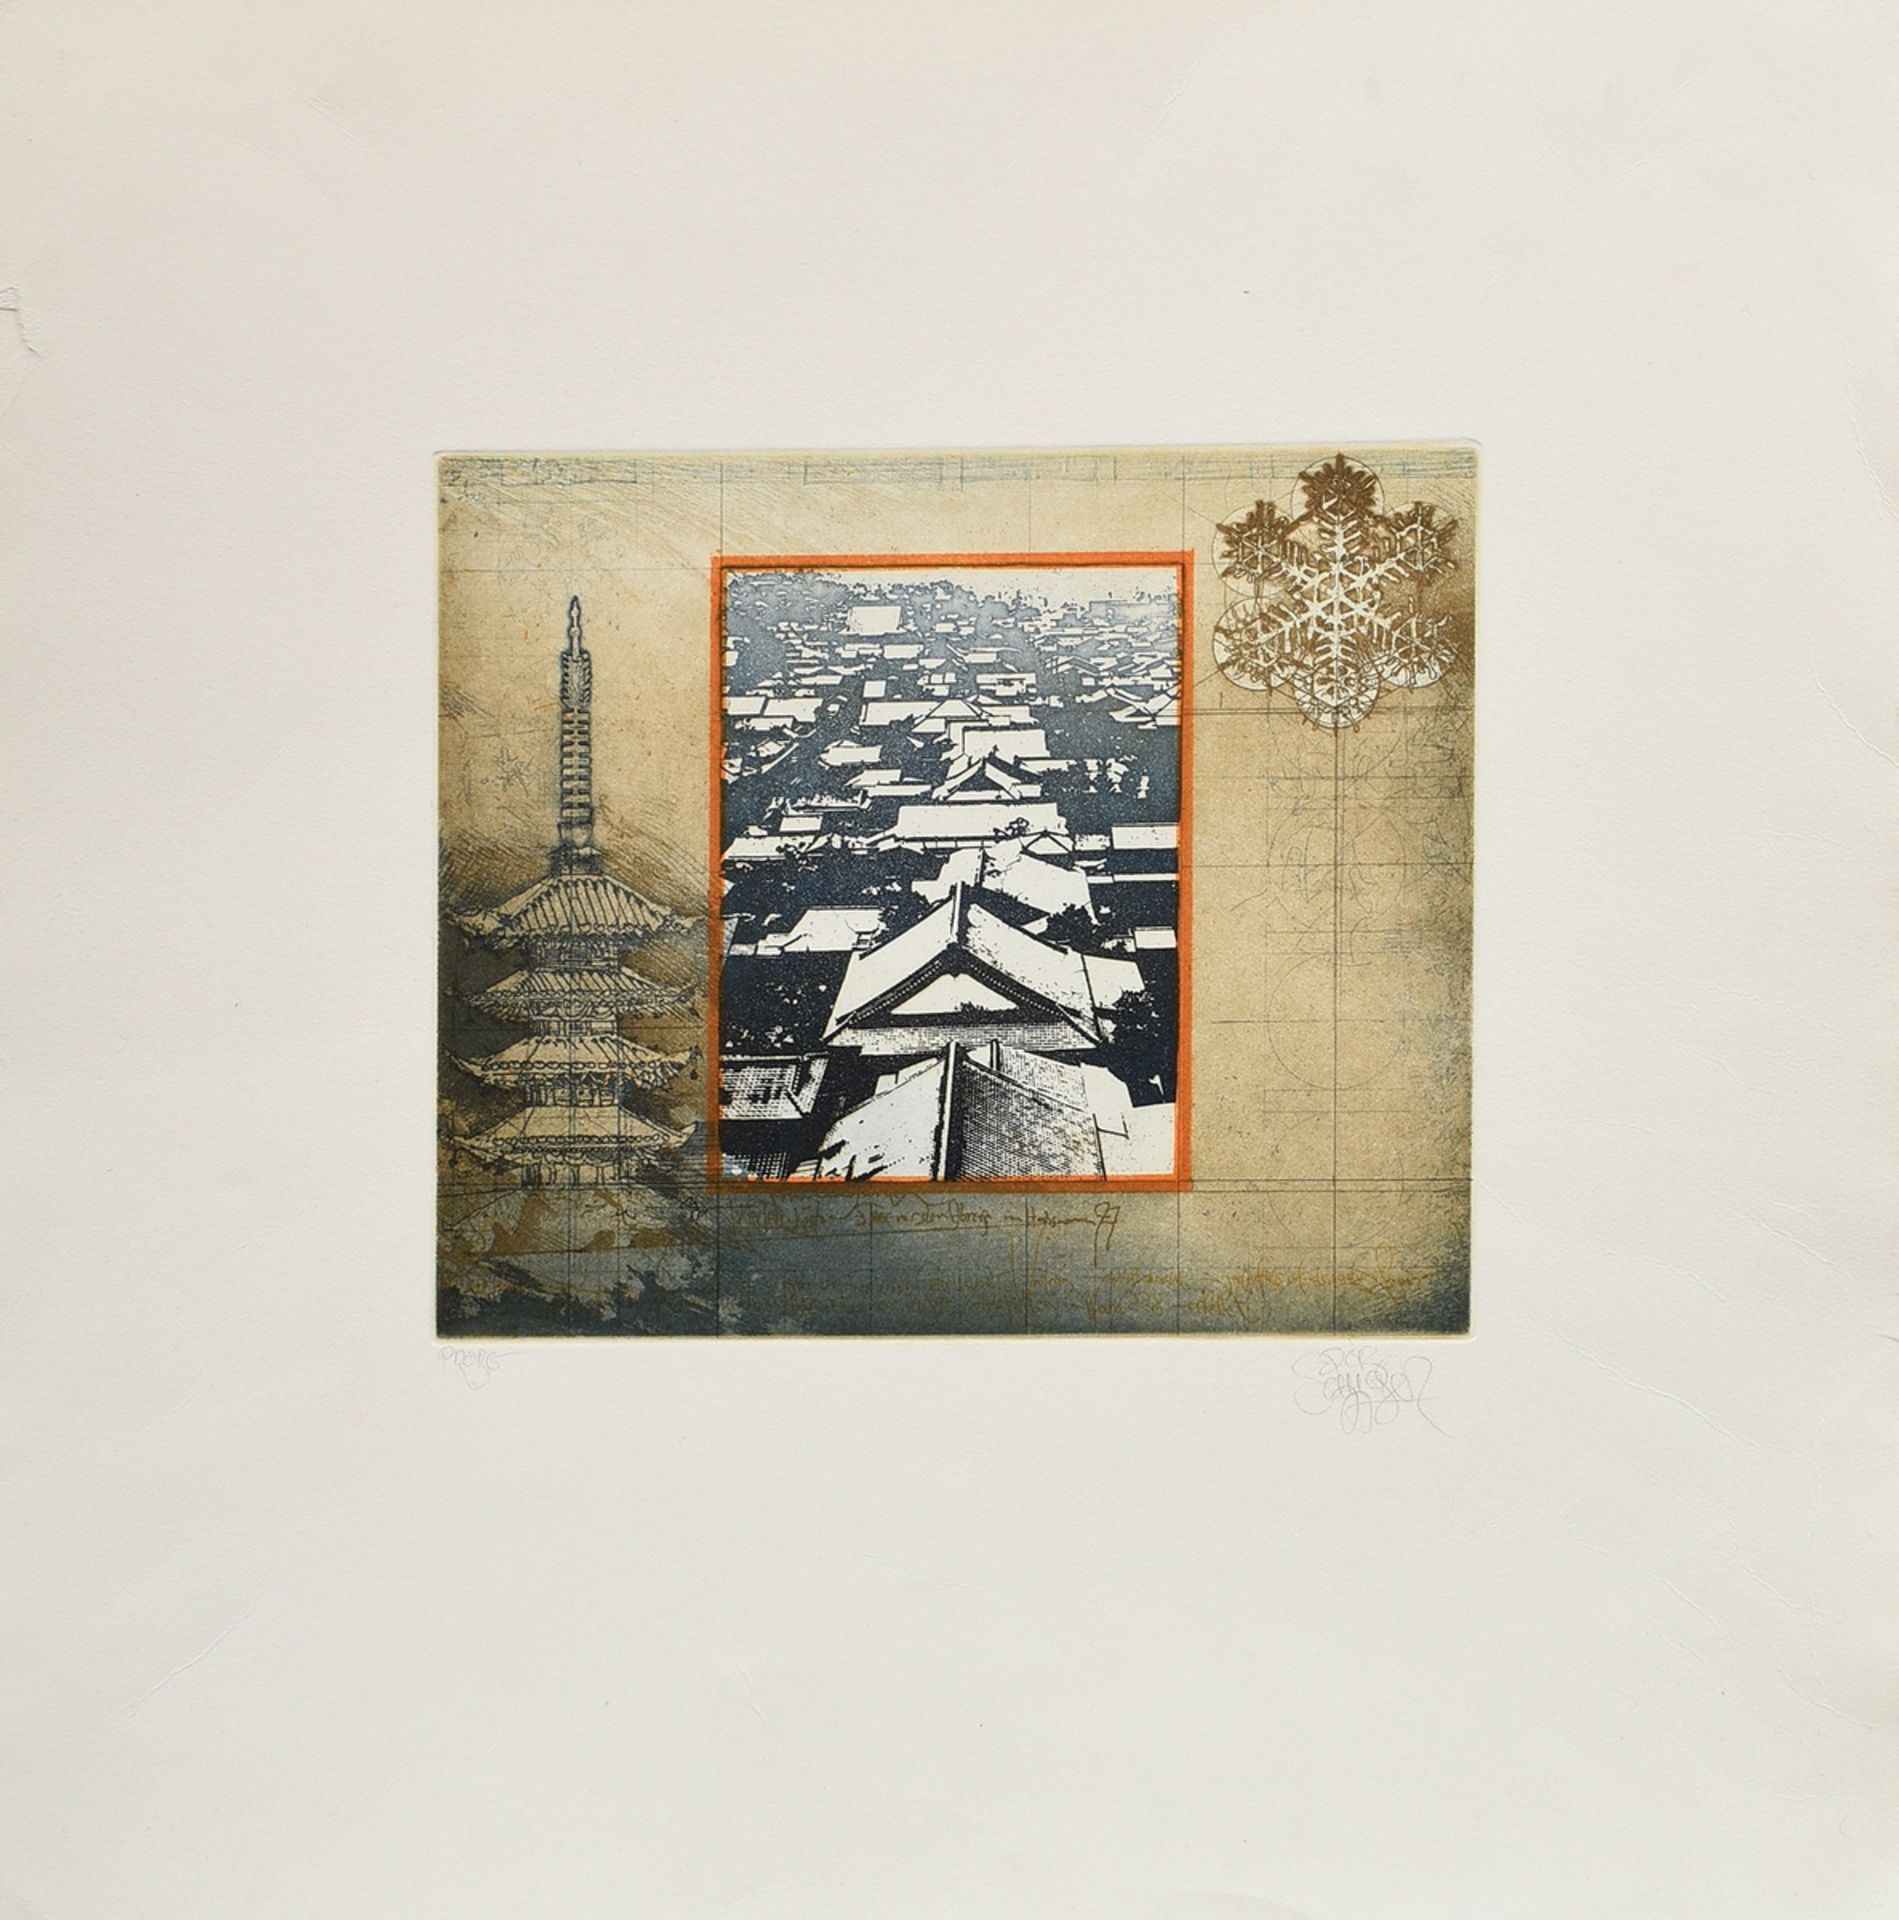 Schmeisser, Jörg (1942-2012) "Kyoto/ Kofukuji-Temple" 1977, color etching, status print, b. sign./d - Image 2 of 3